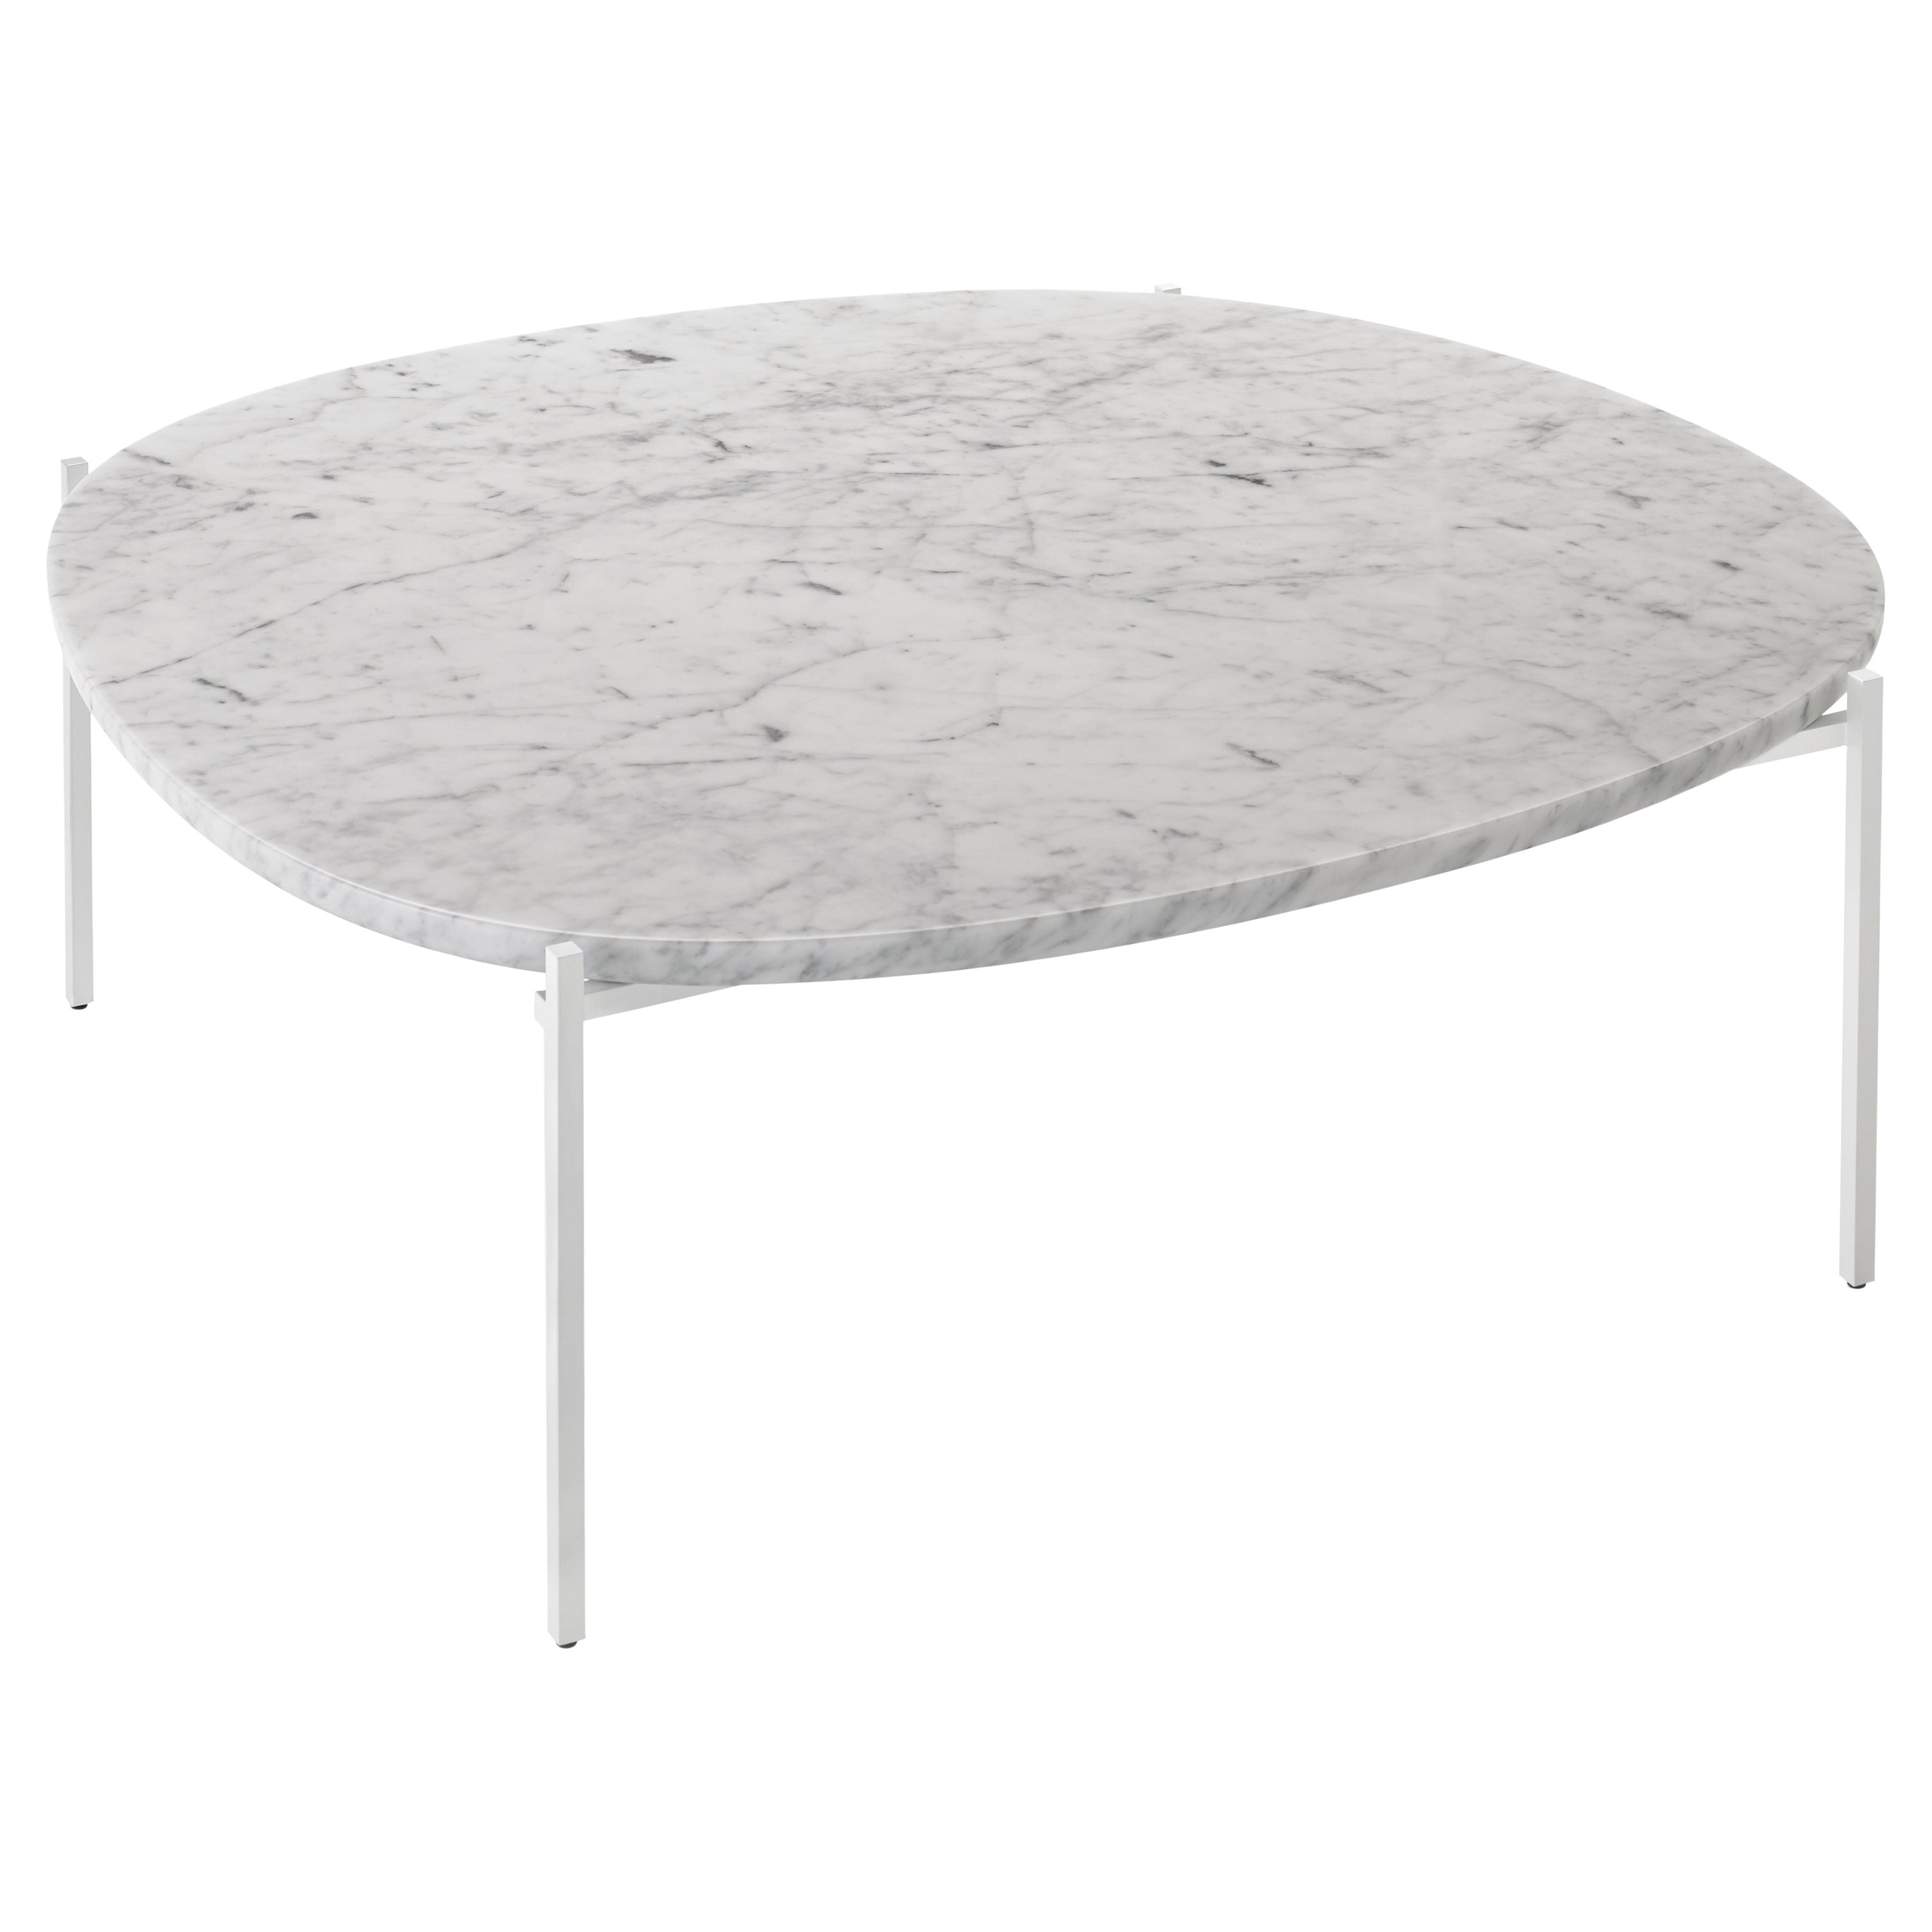 Zanotta Small Niobe Table in Carrara Marble Top with White Steel Frame